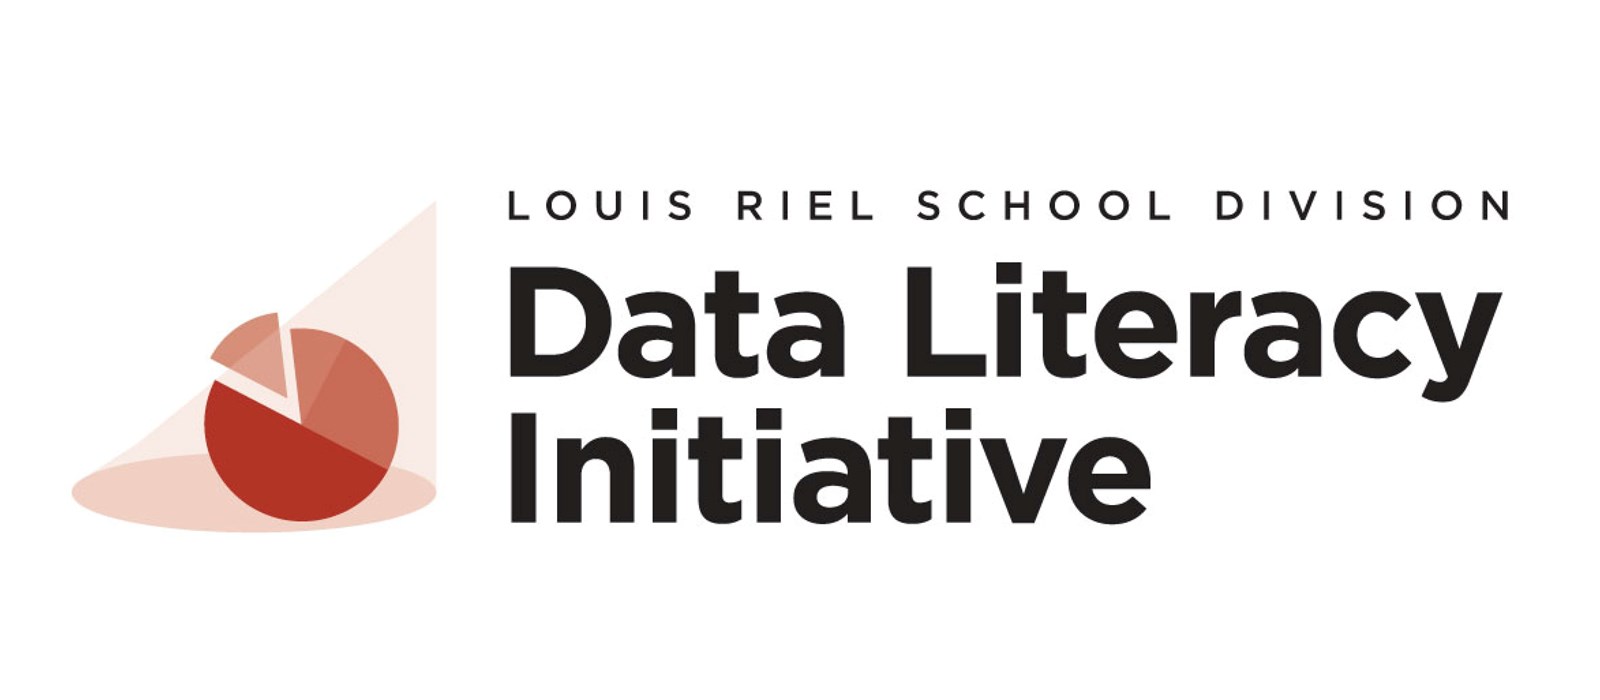 LRSD's Data Literacy Initiative logo